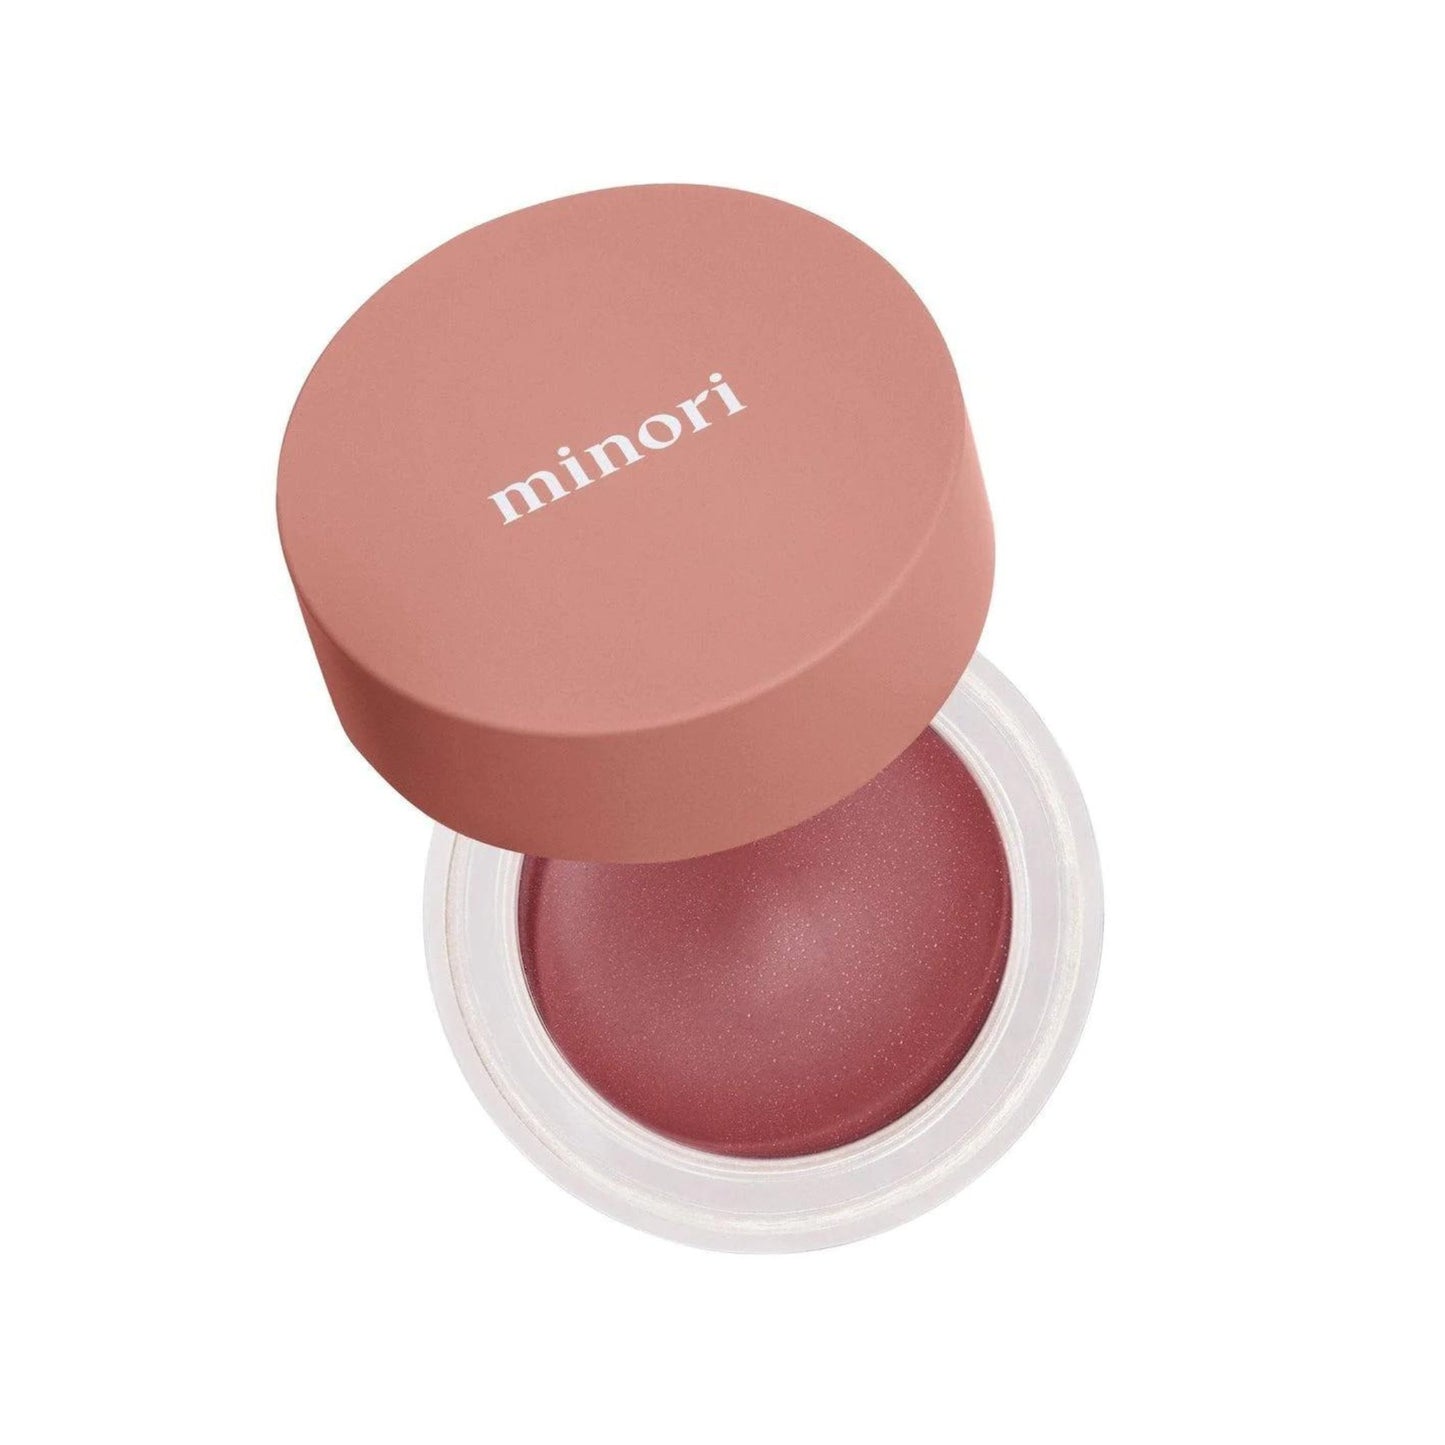 minori - Minori Cream Blush - ORESTA clean beauty simplified